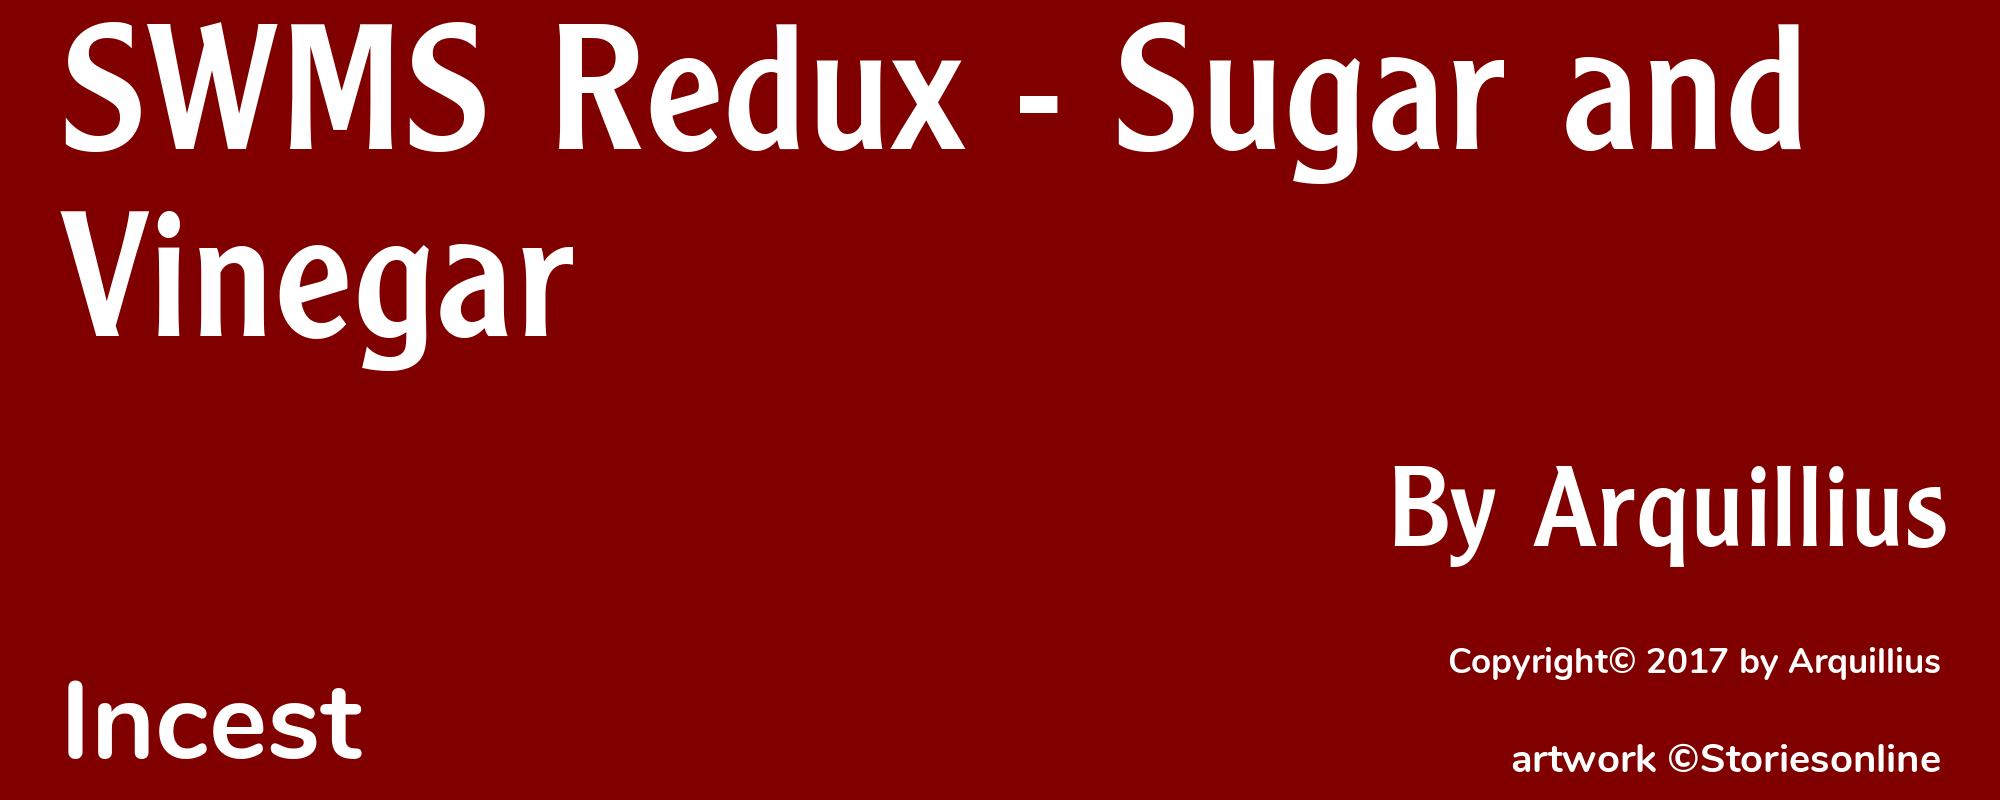 SWMS Redux - Sugar and Vinegar - Cover